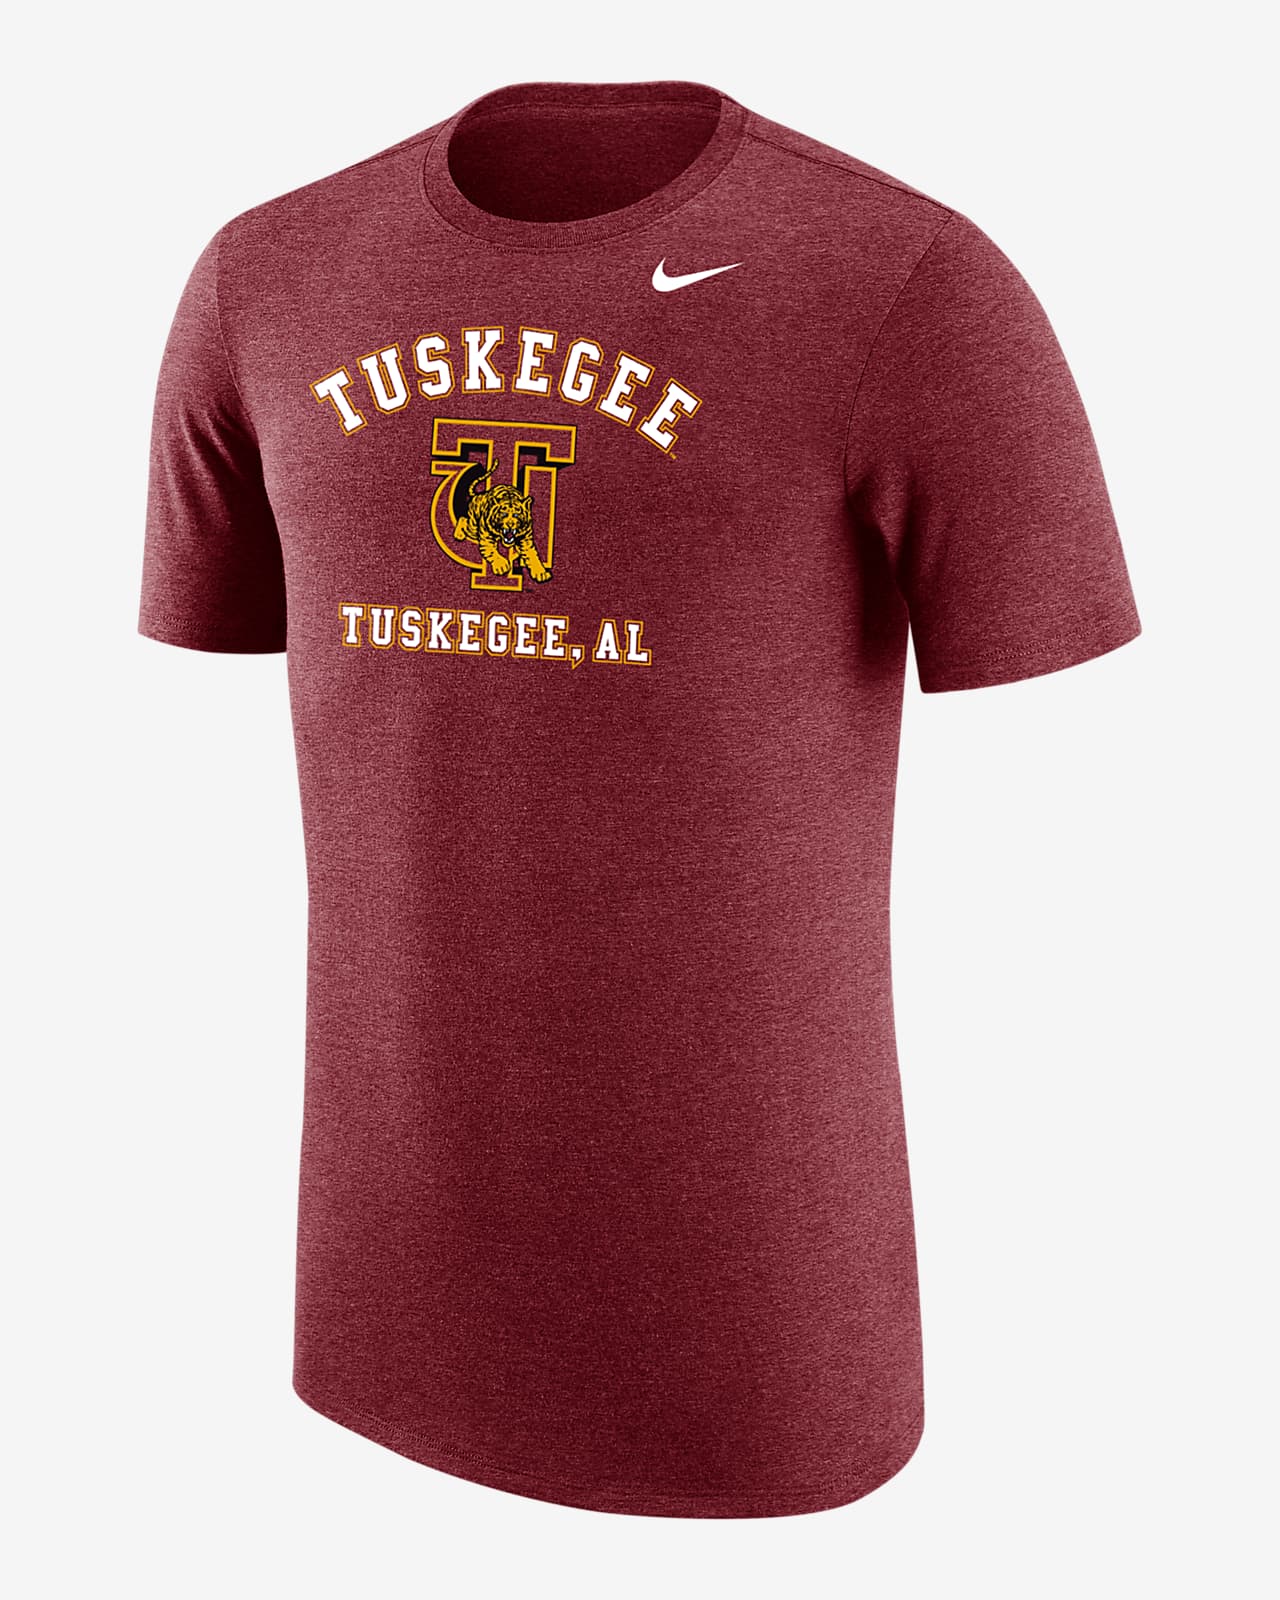 Tuskegee Men's Nike College T-Shirt